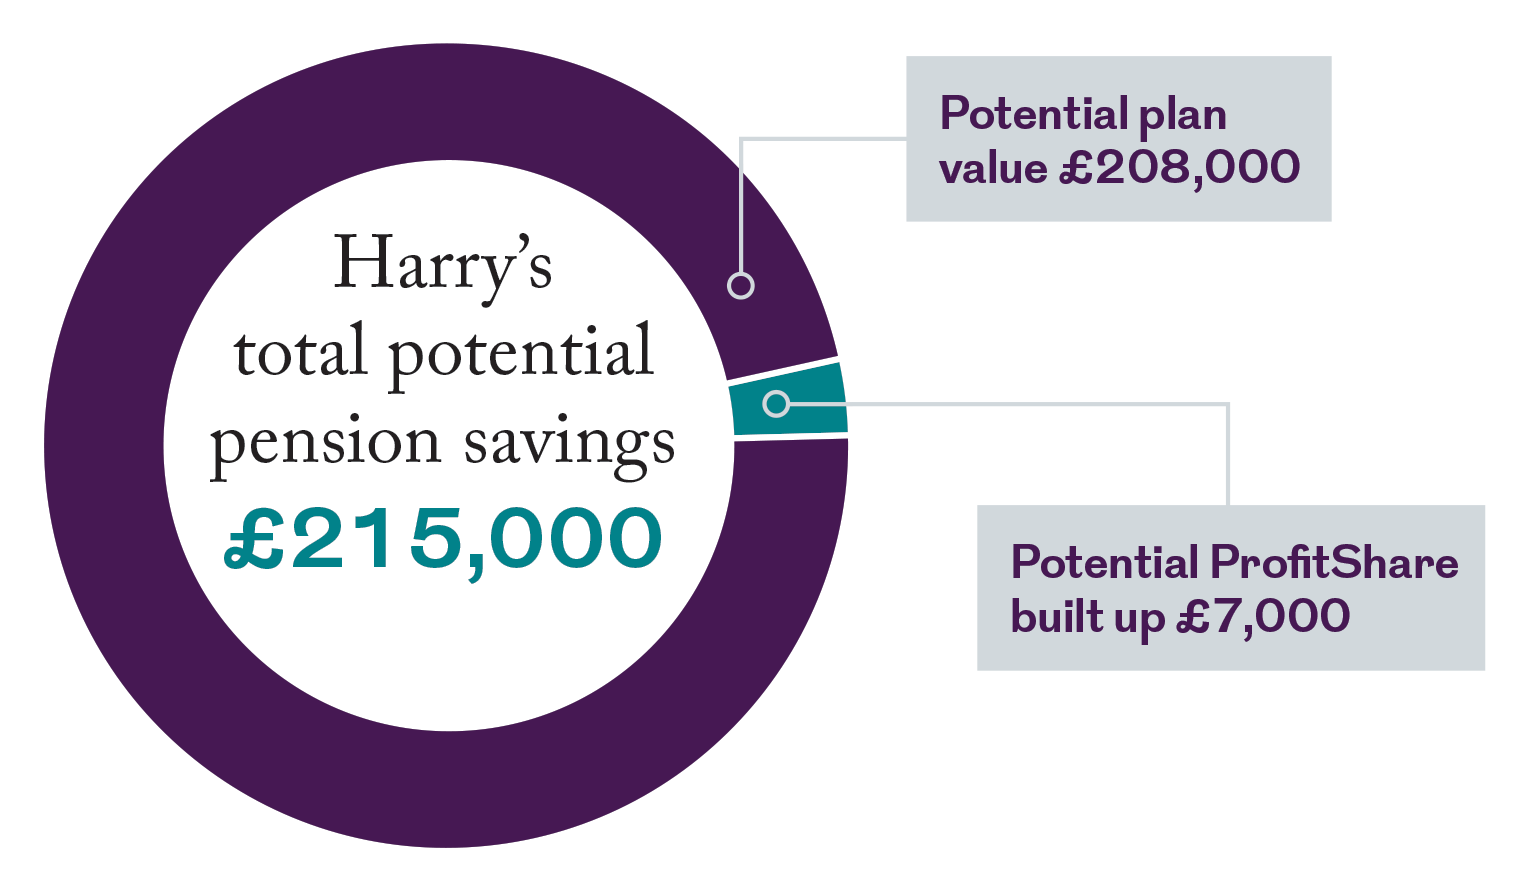 Impact of ProfitShare for Harry